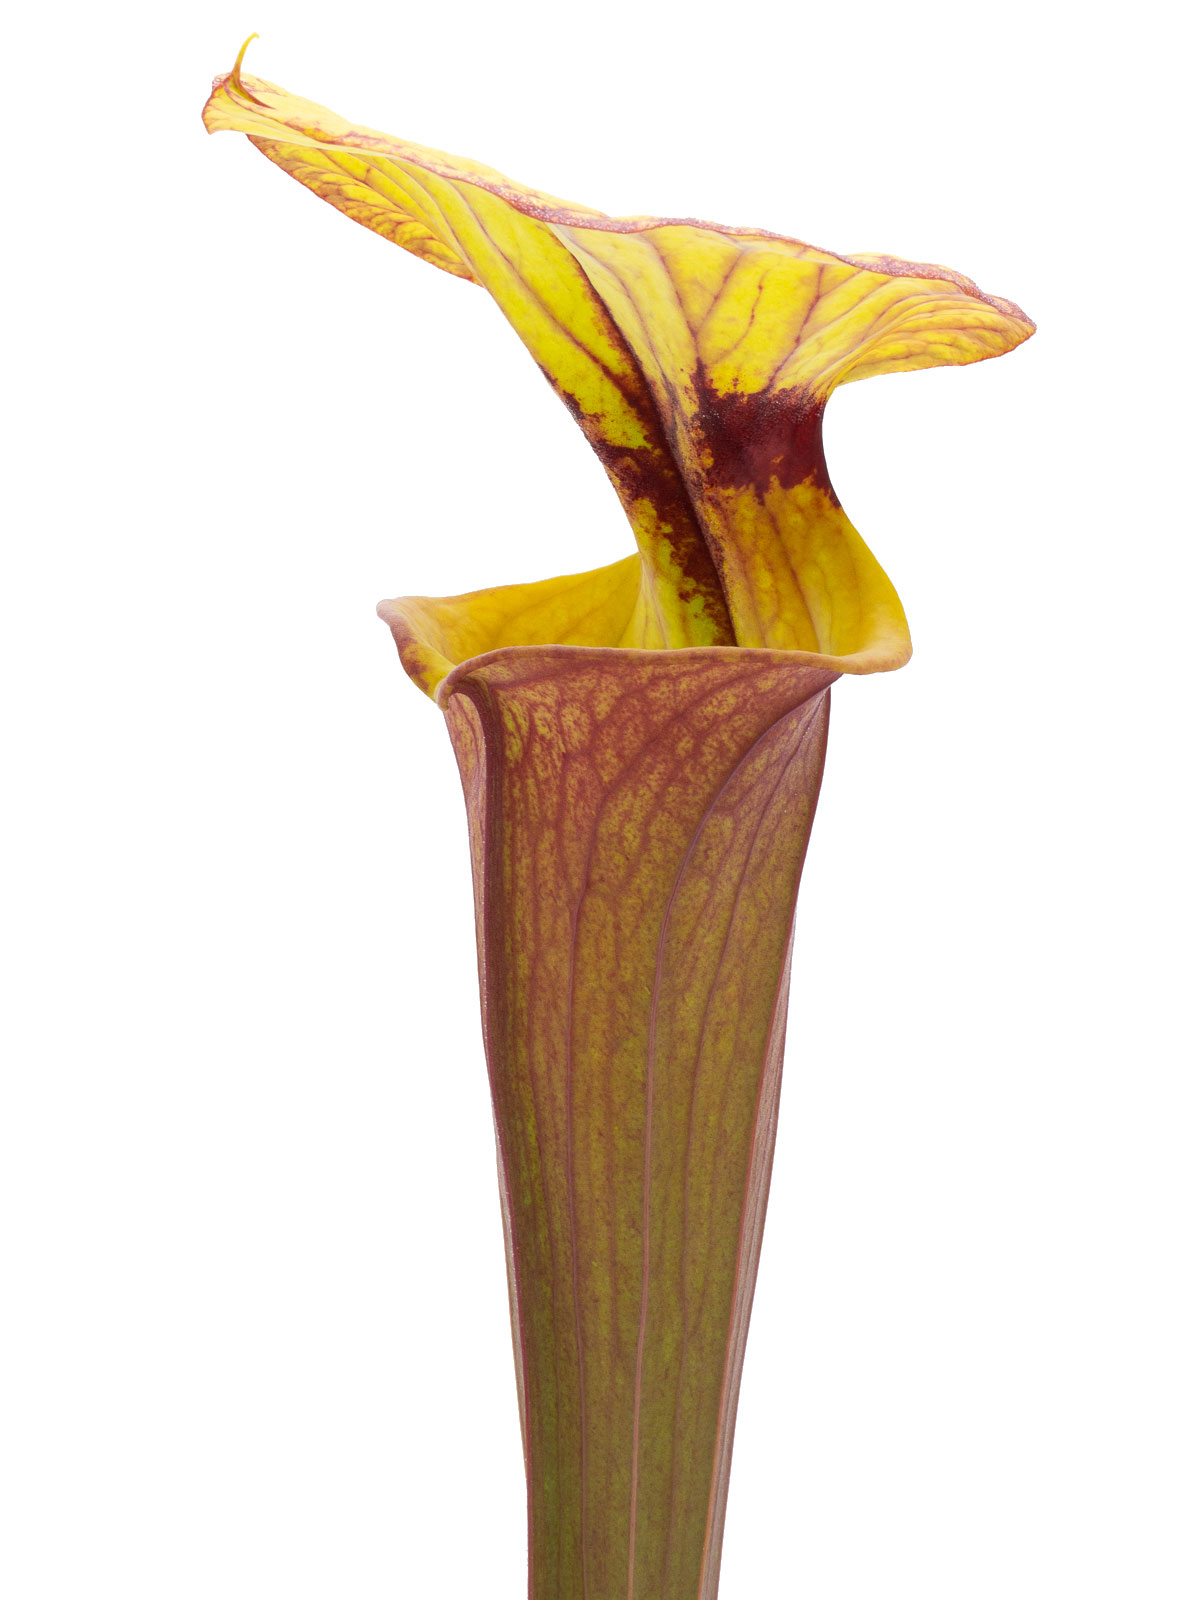 Sarracenia flava var. rubricorpora - MK F105, large pitchers, Apalachicola National Forest, Florida